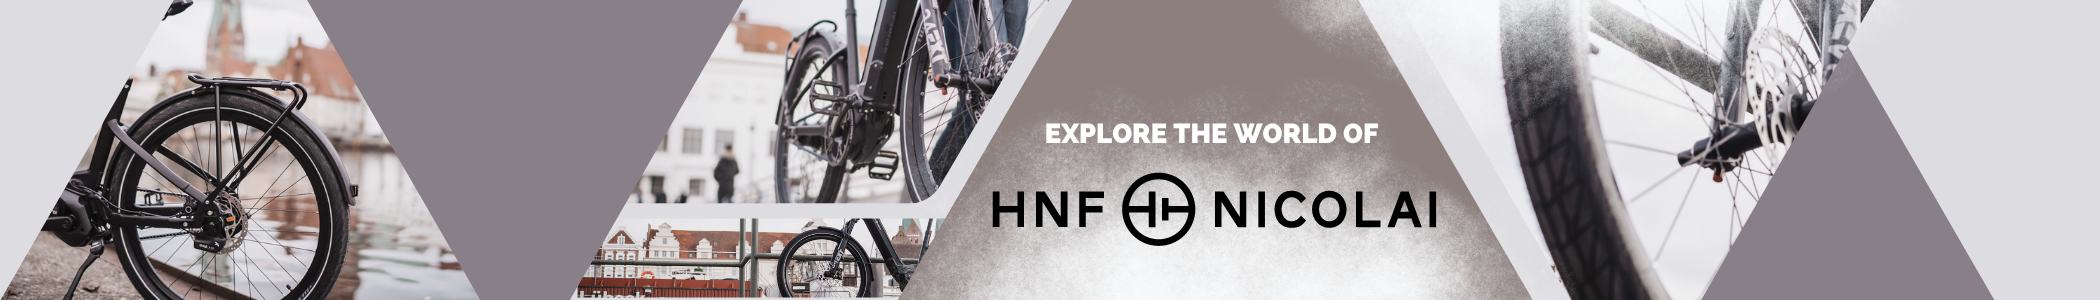 Explore the world of HNF Nicolai!